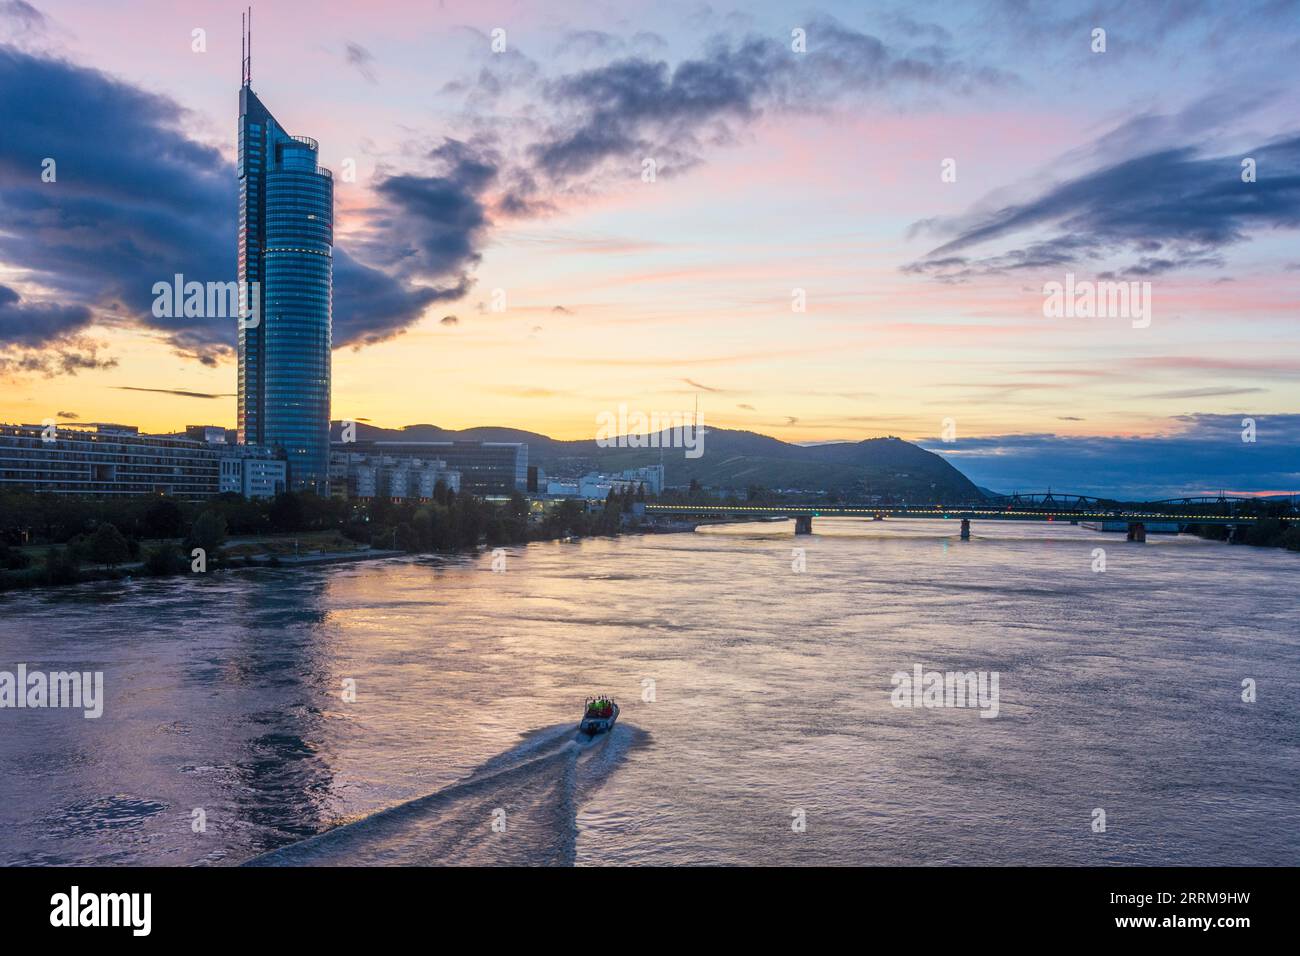 Vienna, fiume Donau (Danubio), Millennium Tower, ponte Nordbahnbrücke, nave di soccorso, tramonto tra 20. Distretto Brigittenau, Vienna, Austria Foto Stock